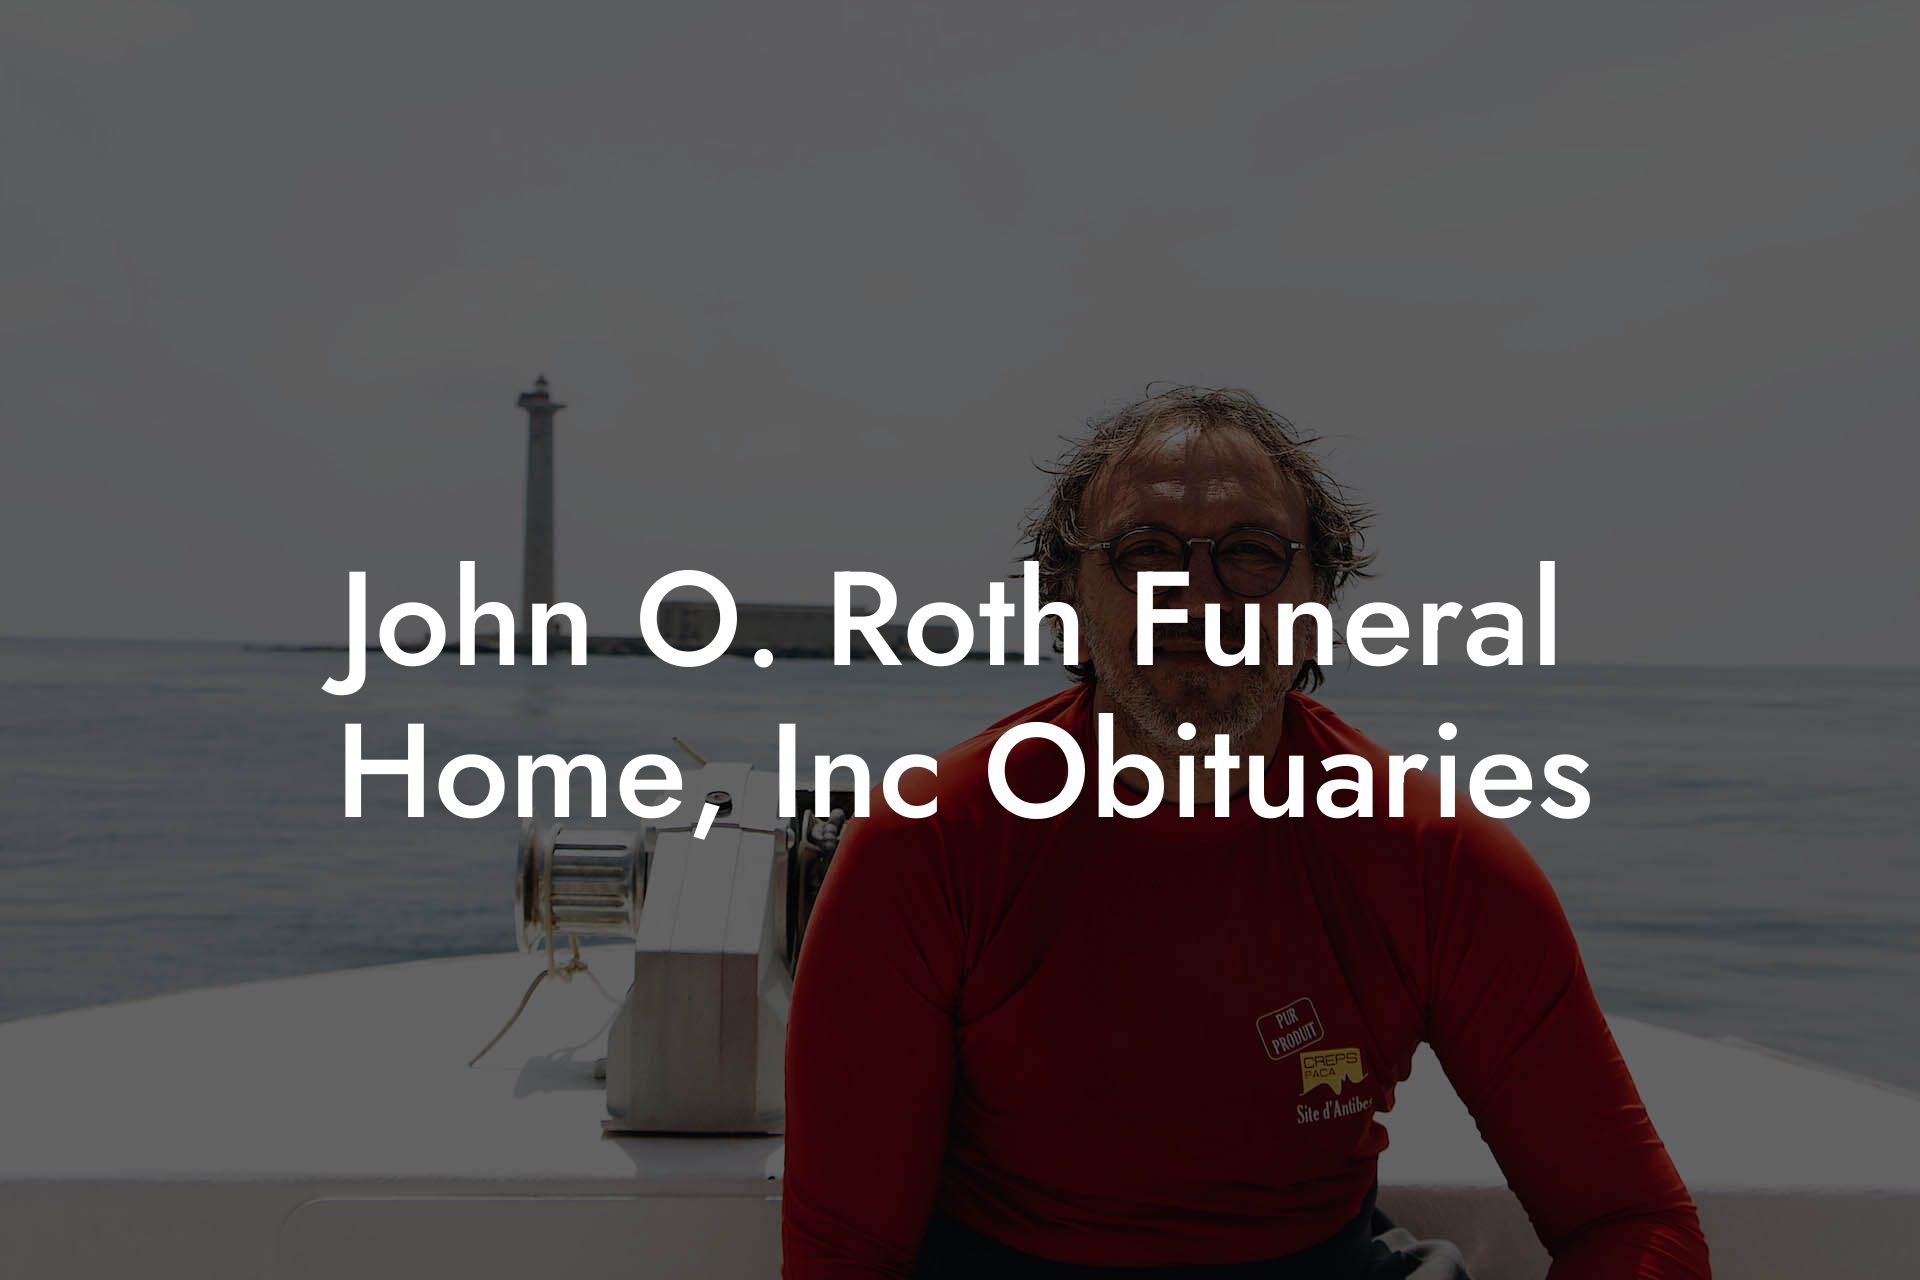 John O. Roth Funeral Home, Inc Obituaries